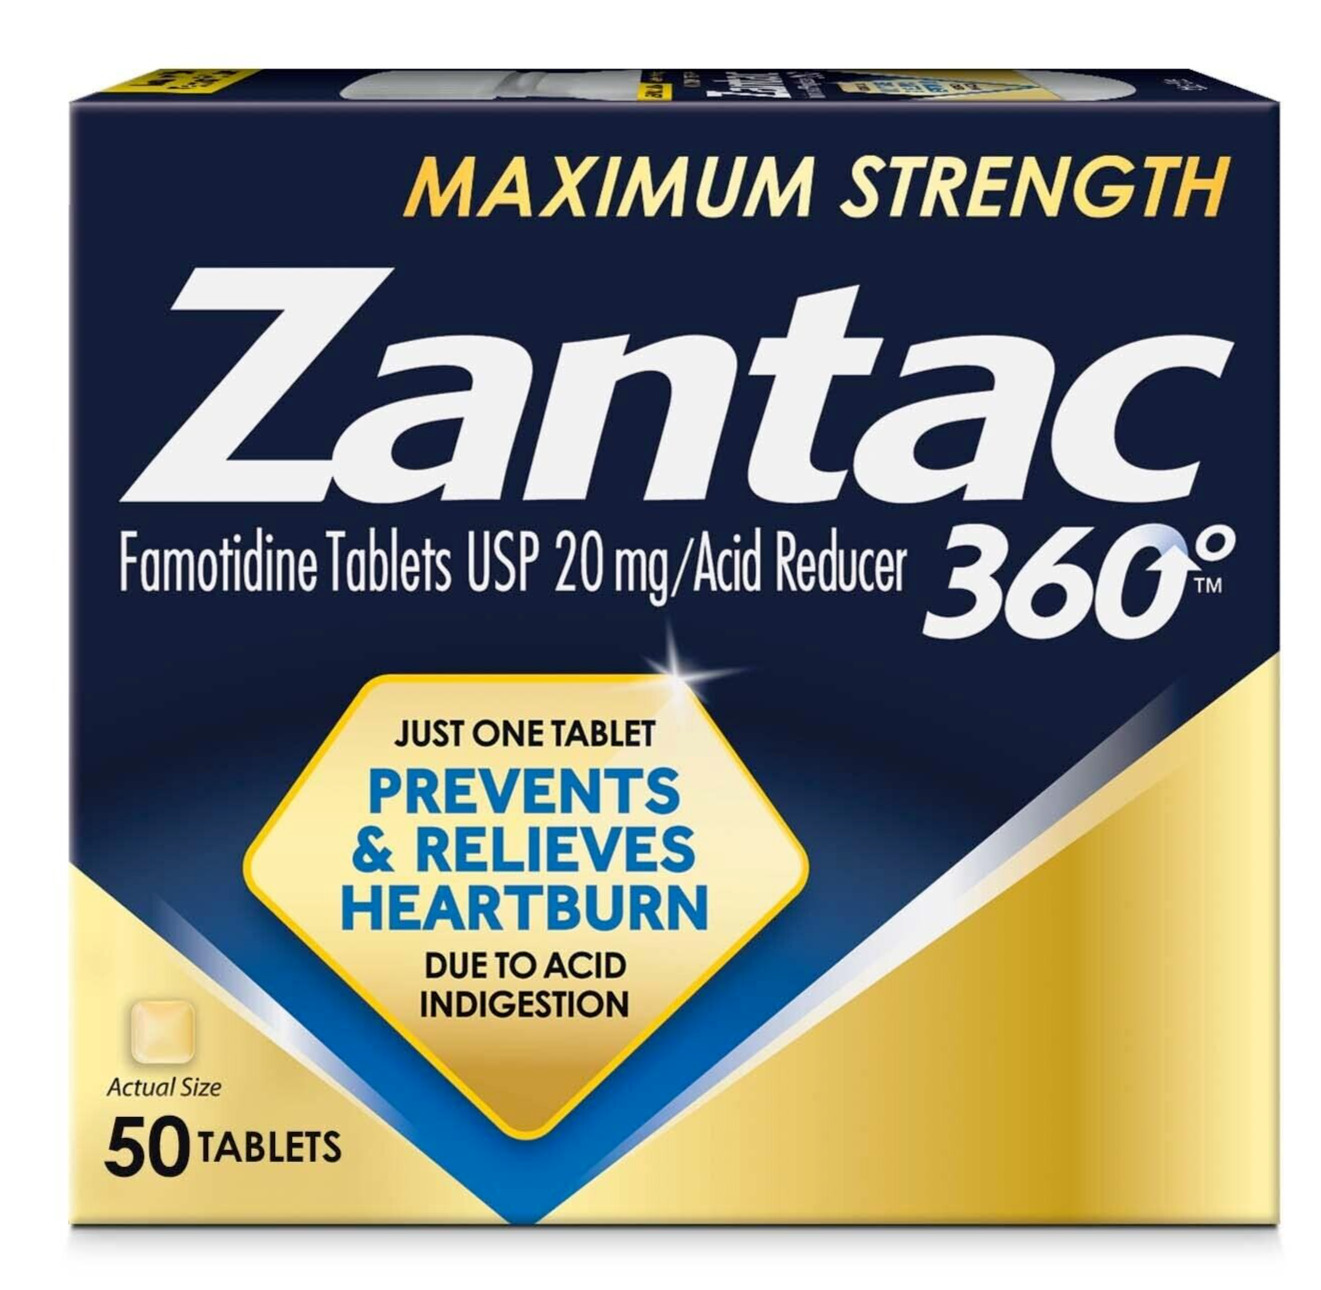 Zantac 360 Maximum Strength - 50 Tablets - Exp 7/25